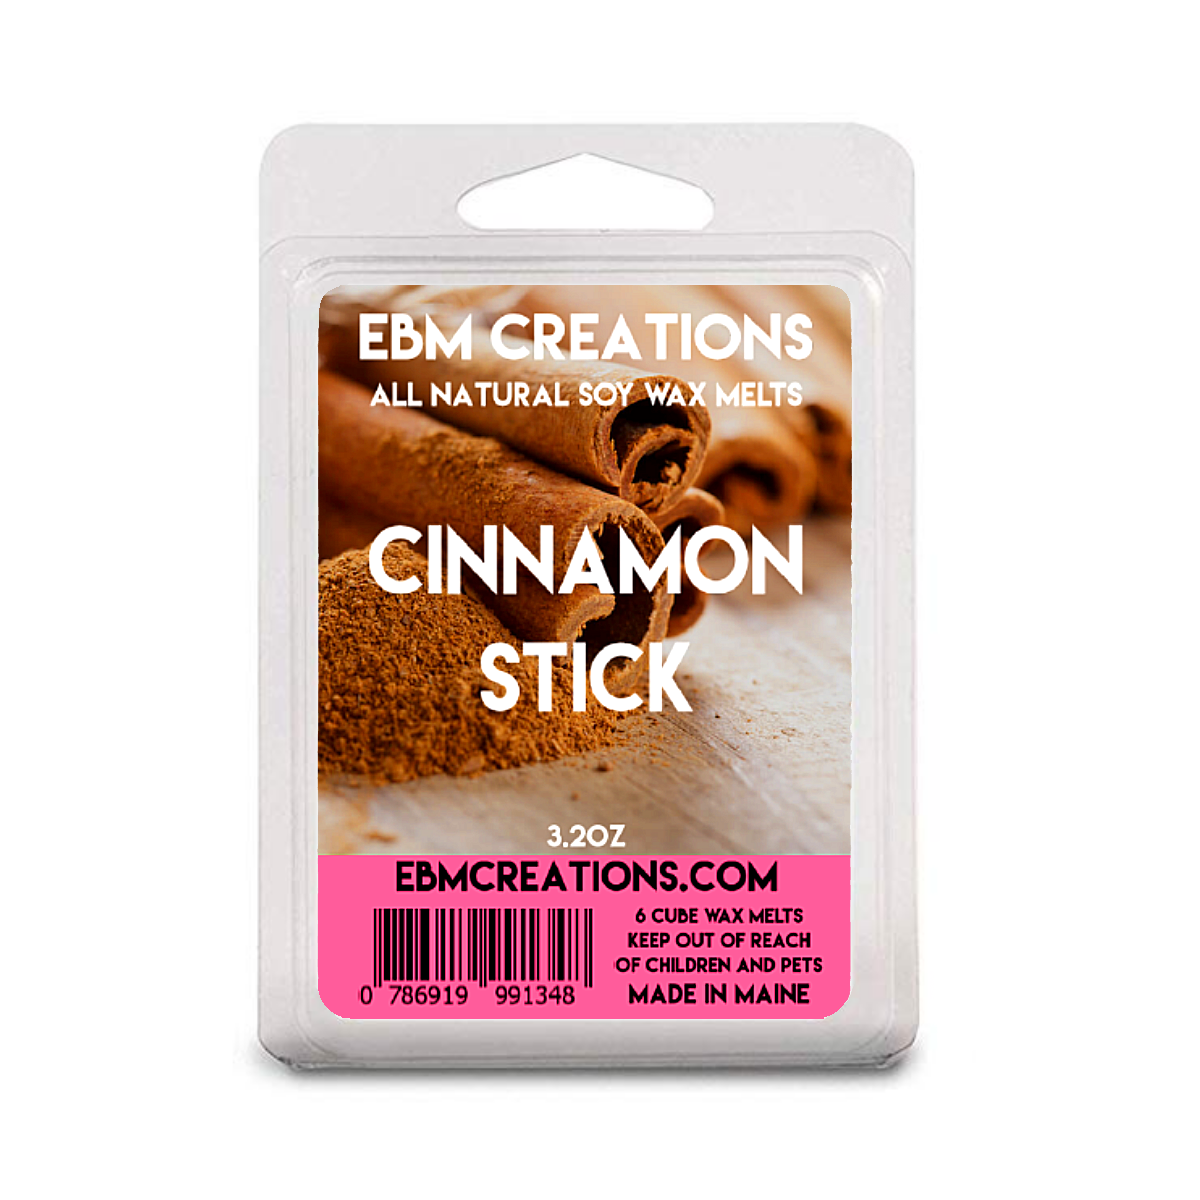 Cinnamon Stick - 3.2oz Clamshell